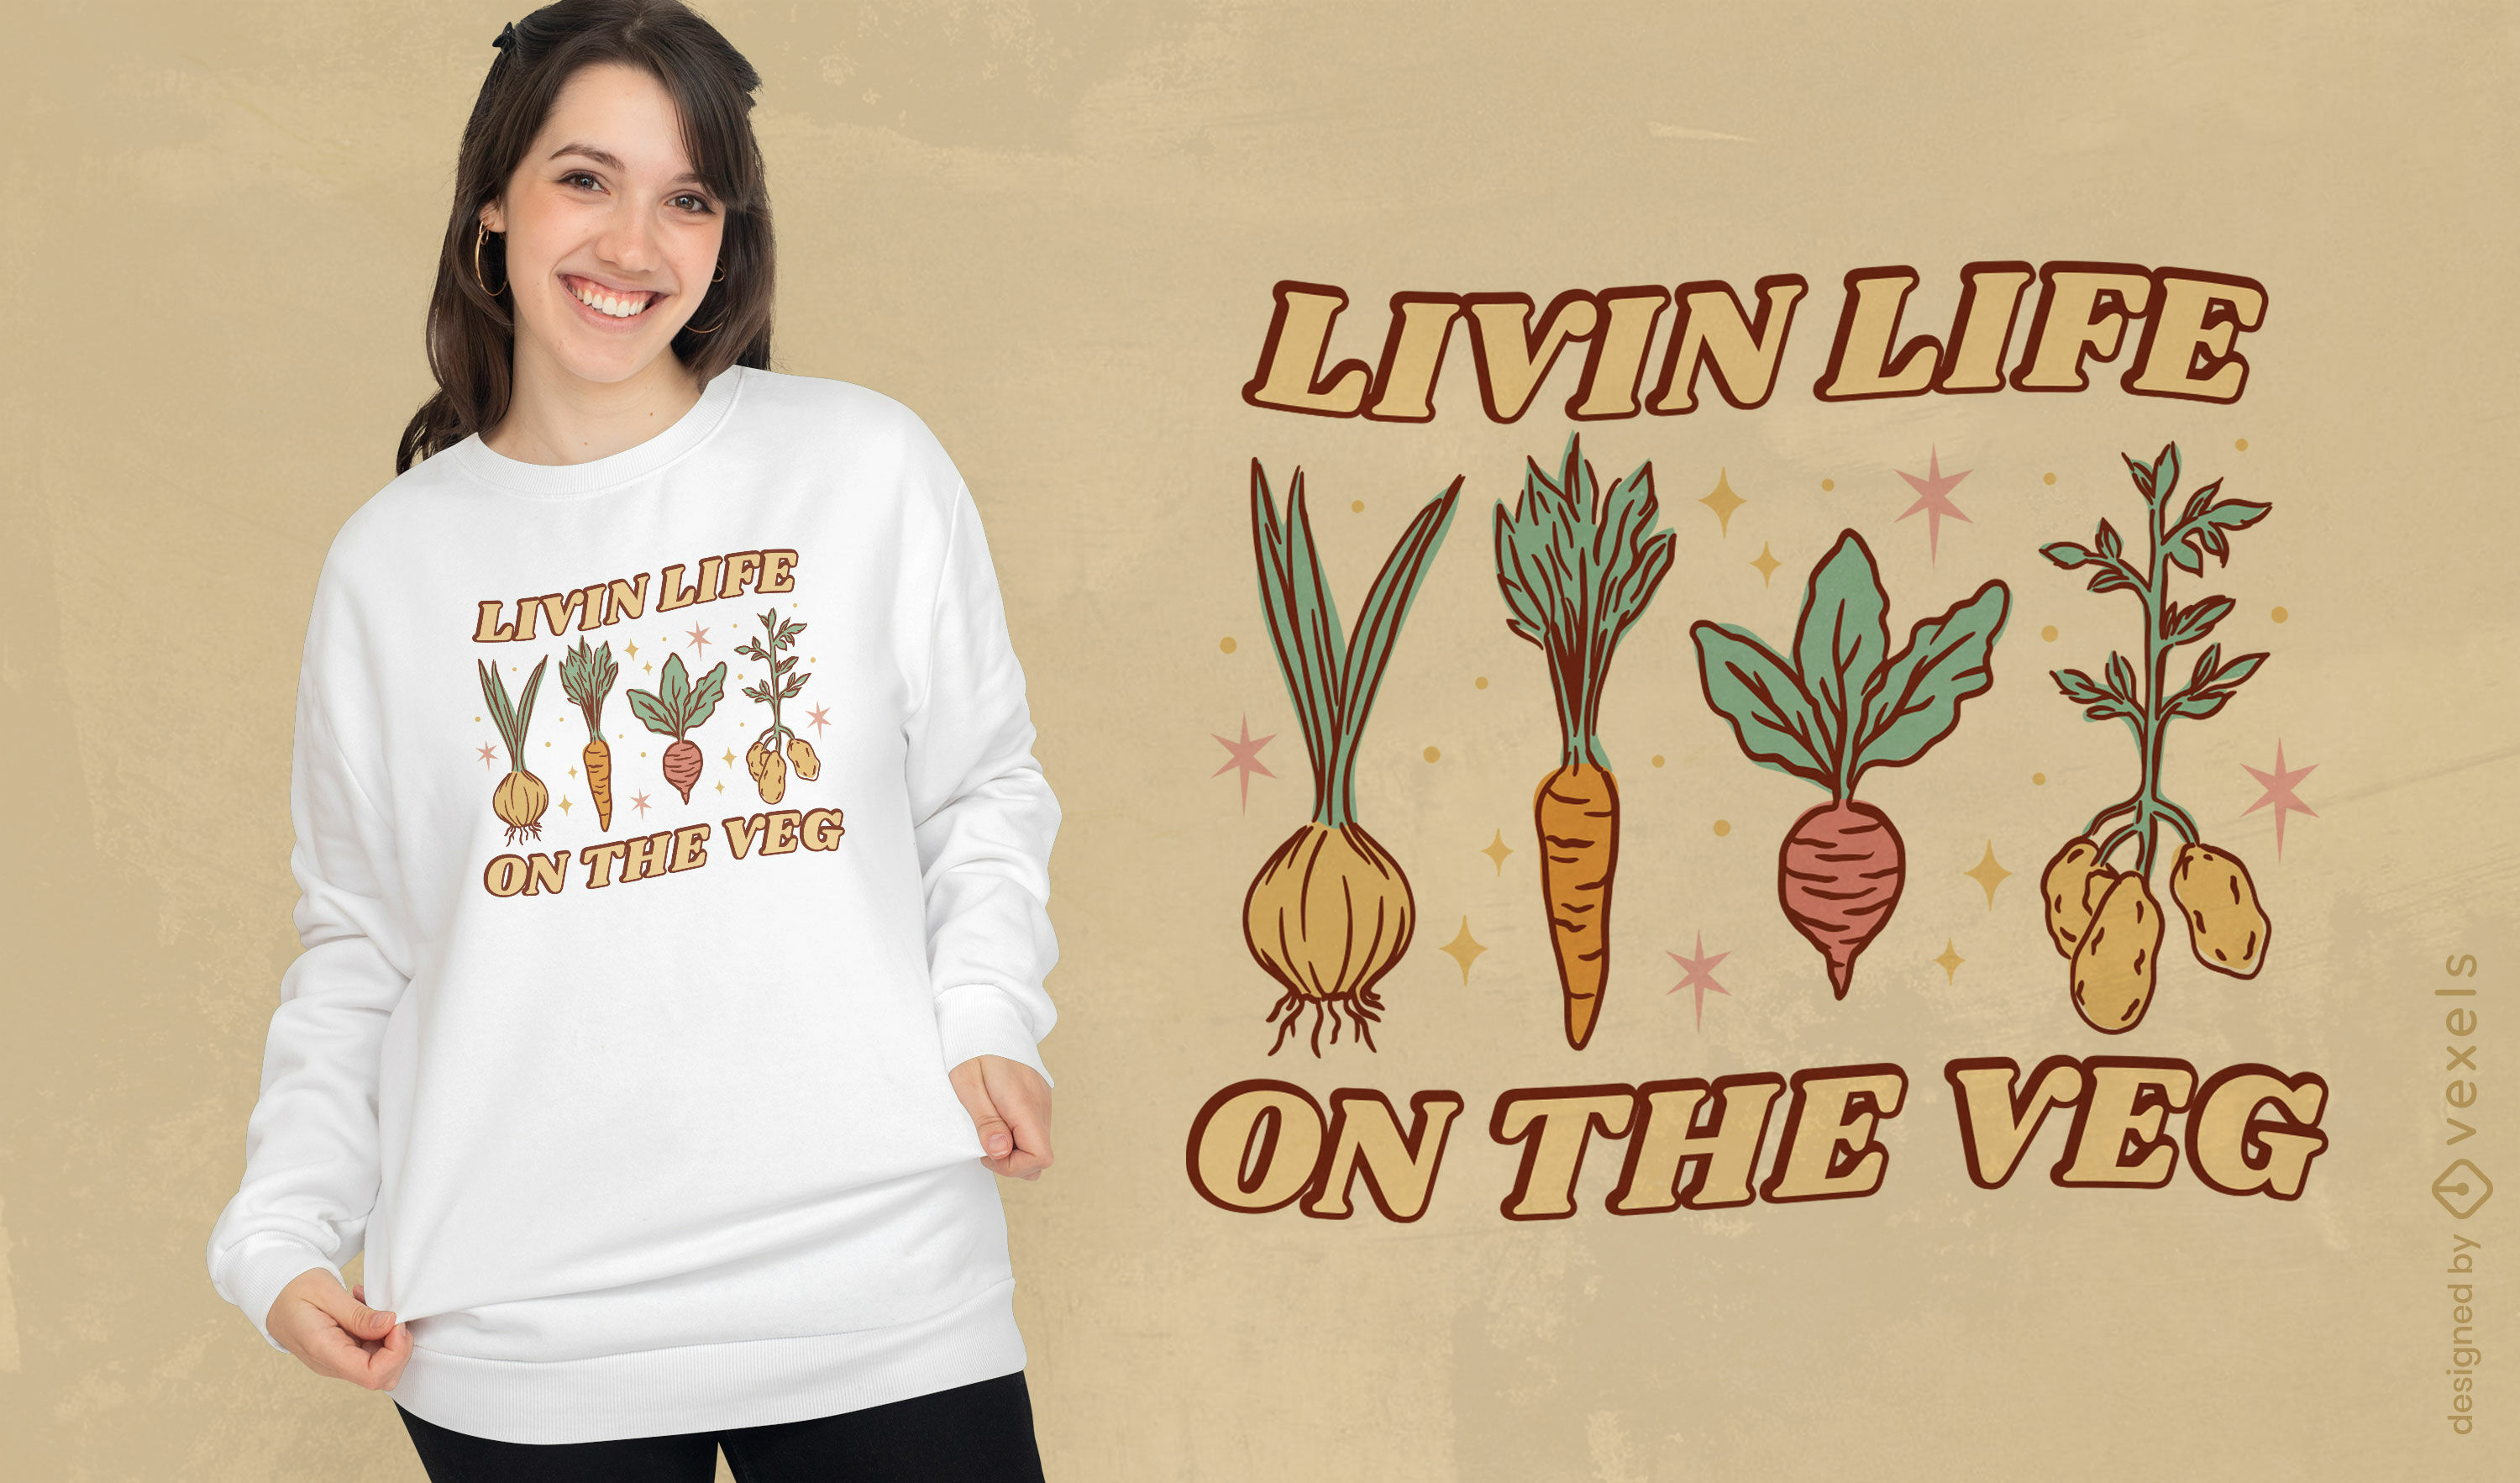 Vegetables vegan lifestyle t-shirt design